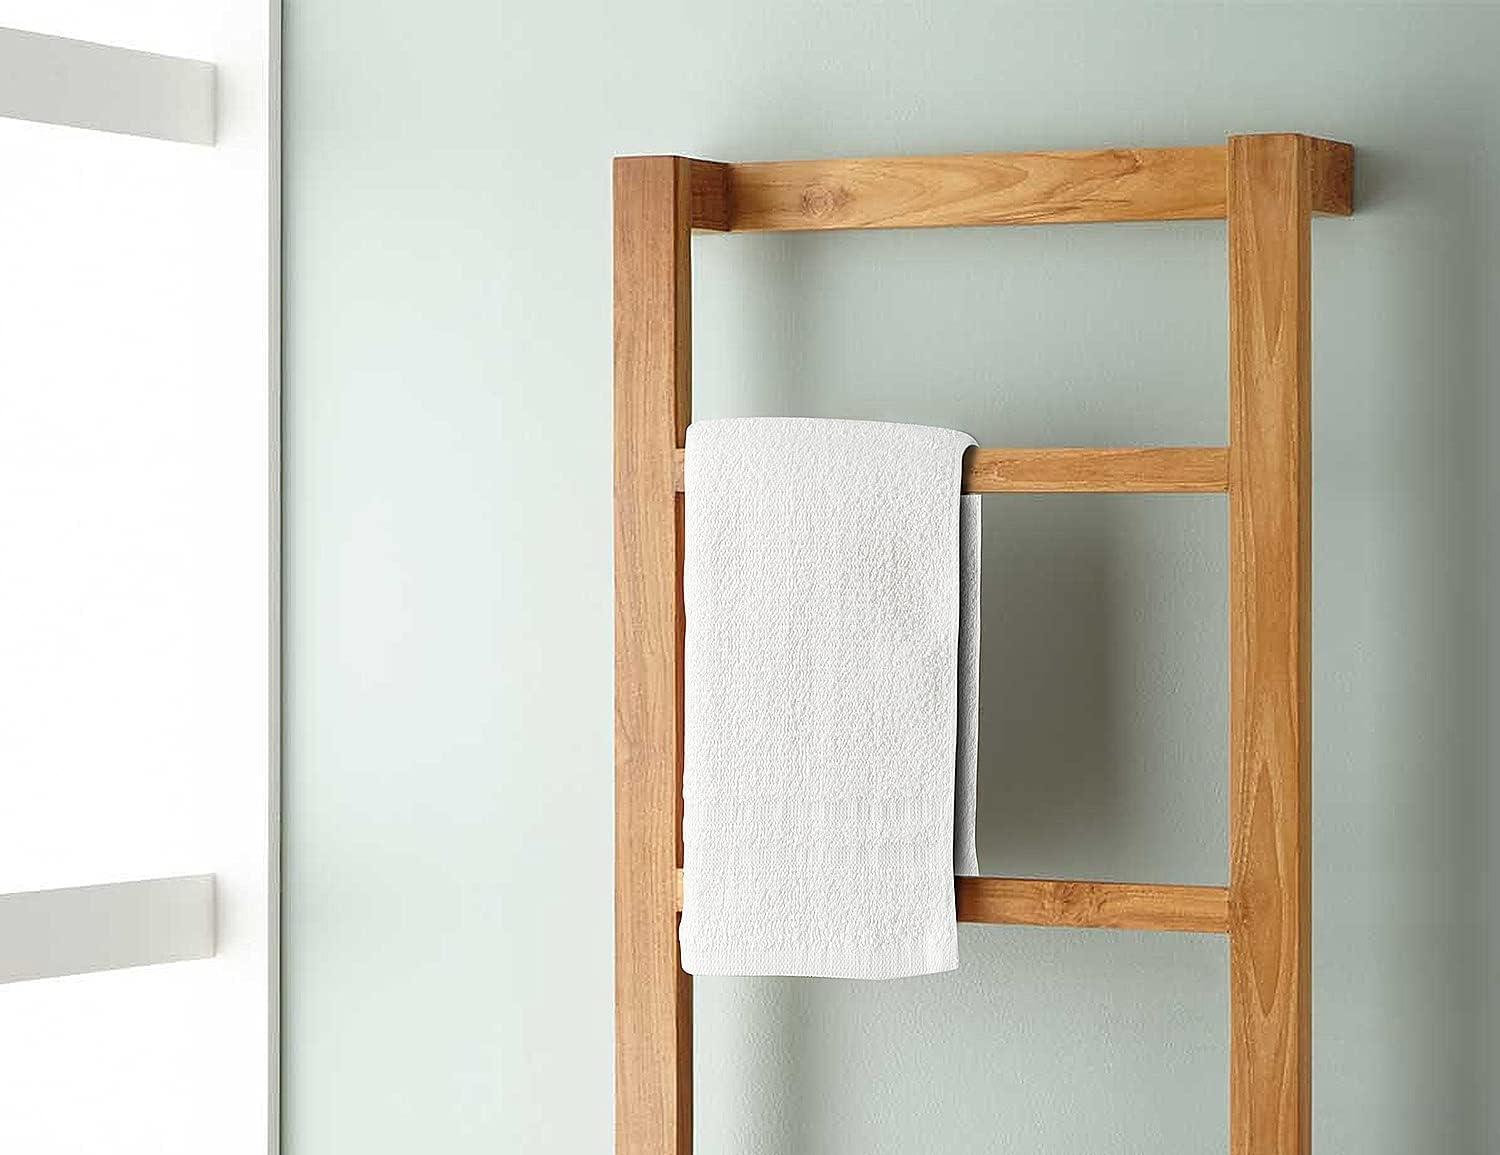 Set Grey Cotton Towel Set For Men Toalla Face Washcloth Hand Towel